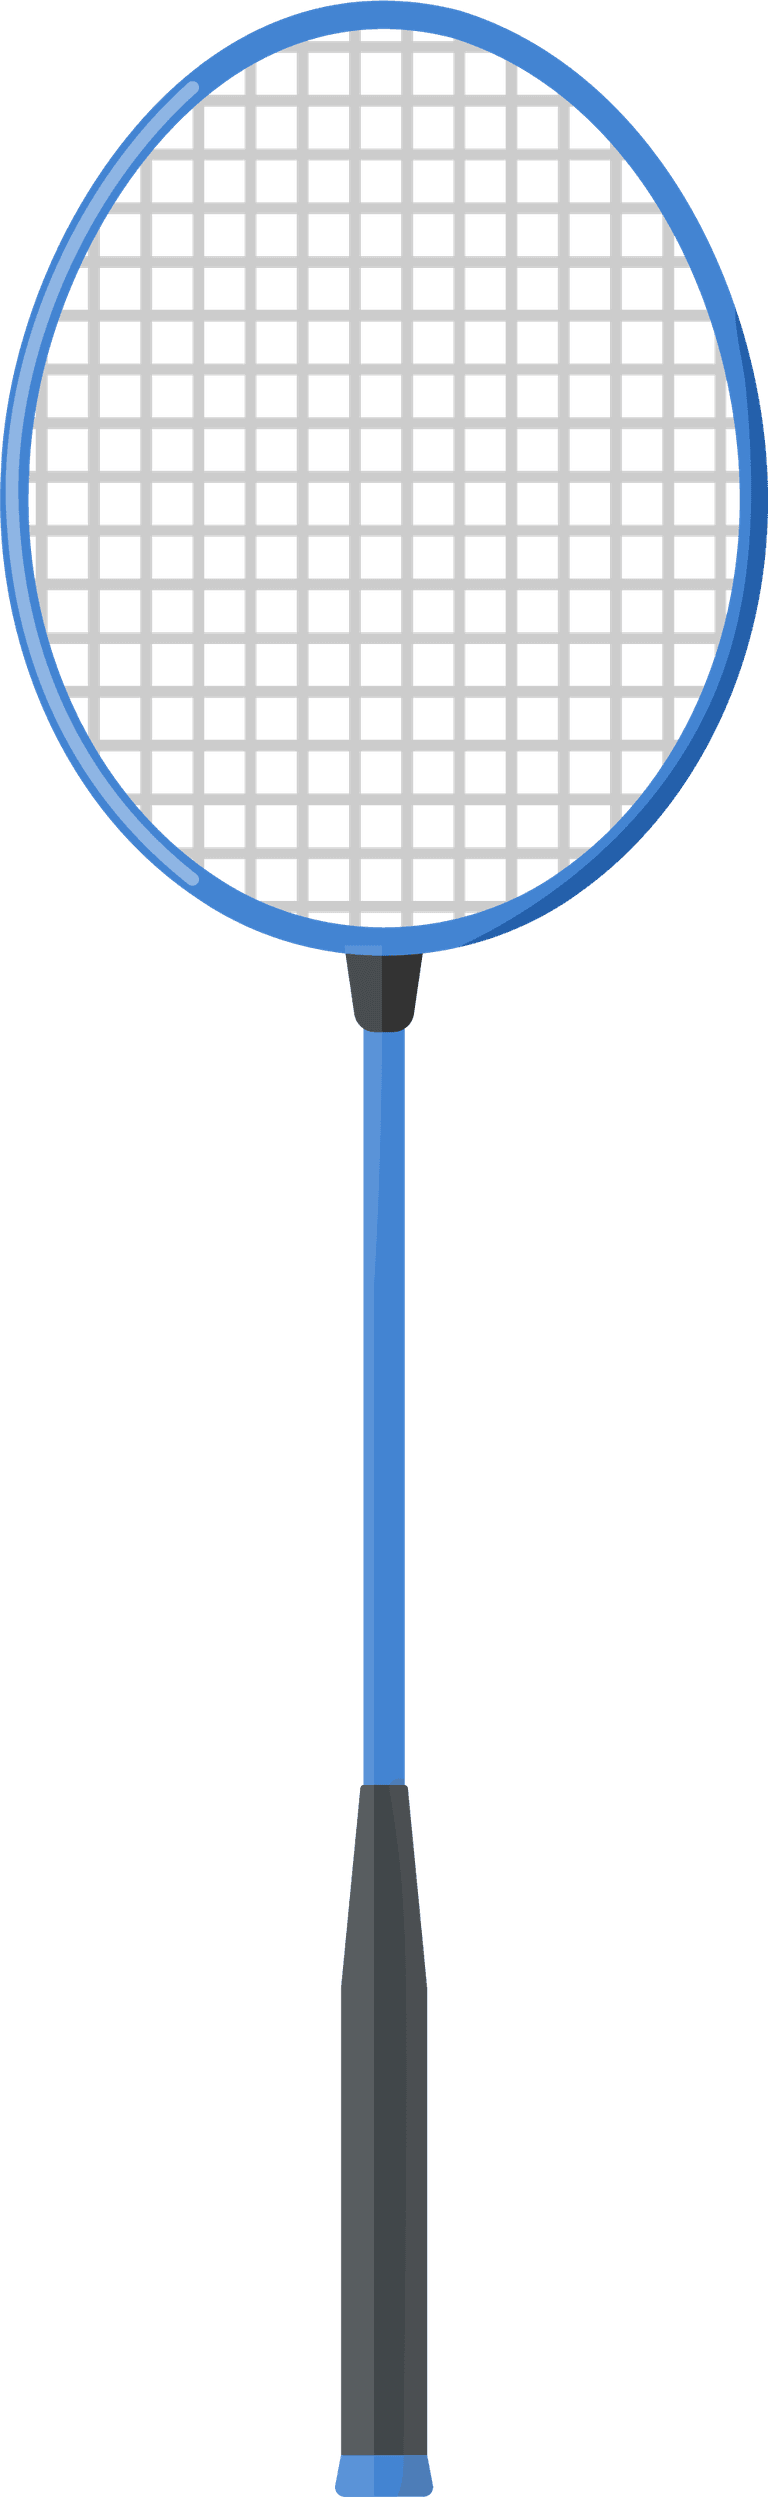 badminton racket gaming item hockey rugby baseball tennis racket